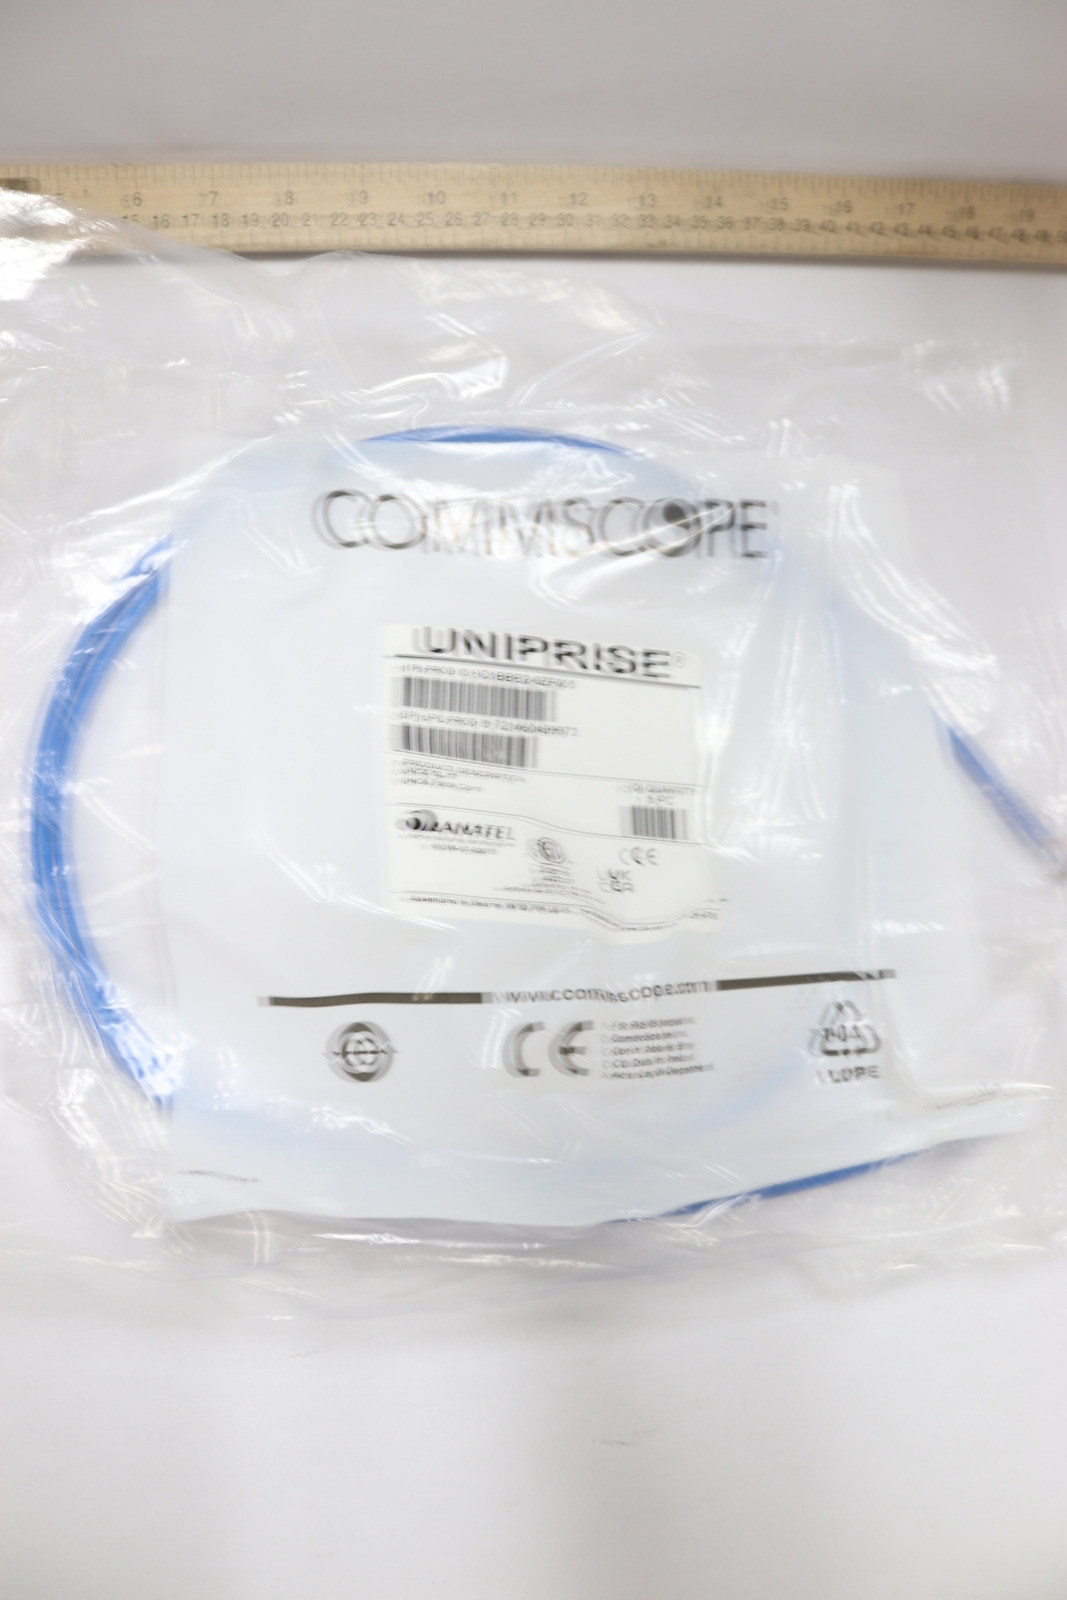 Commscope Uniprise Category 6 U/UTP Patch Cord RJ45 to RJ45 Non-Plenum Blue 5FT